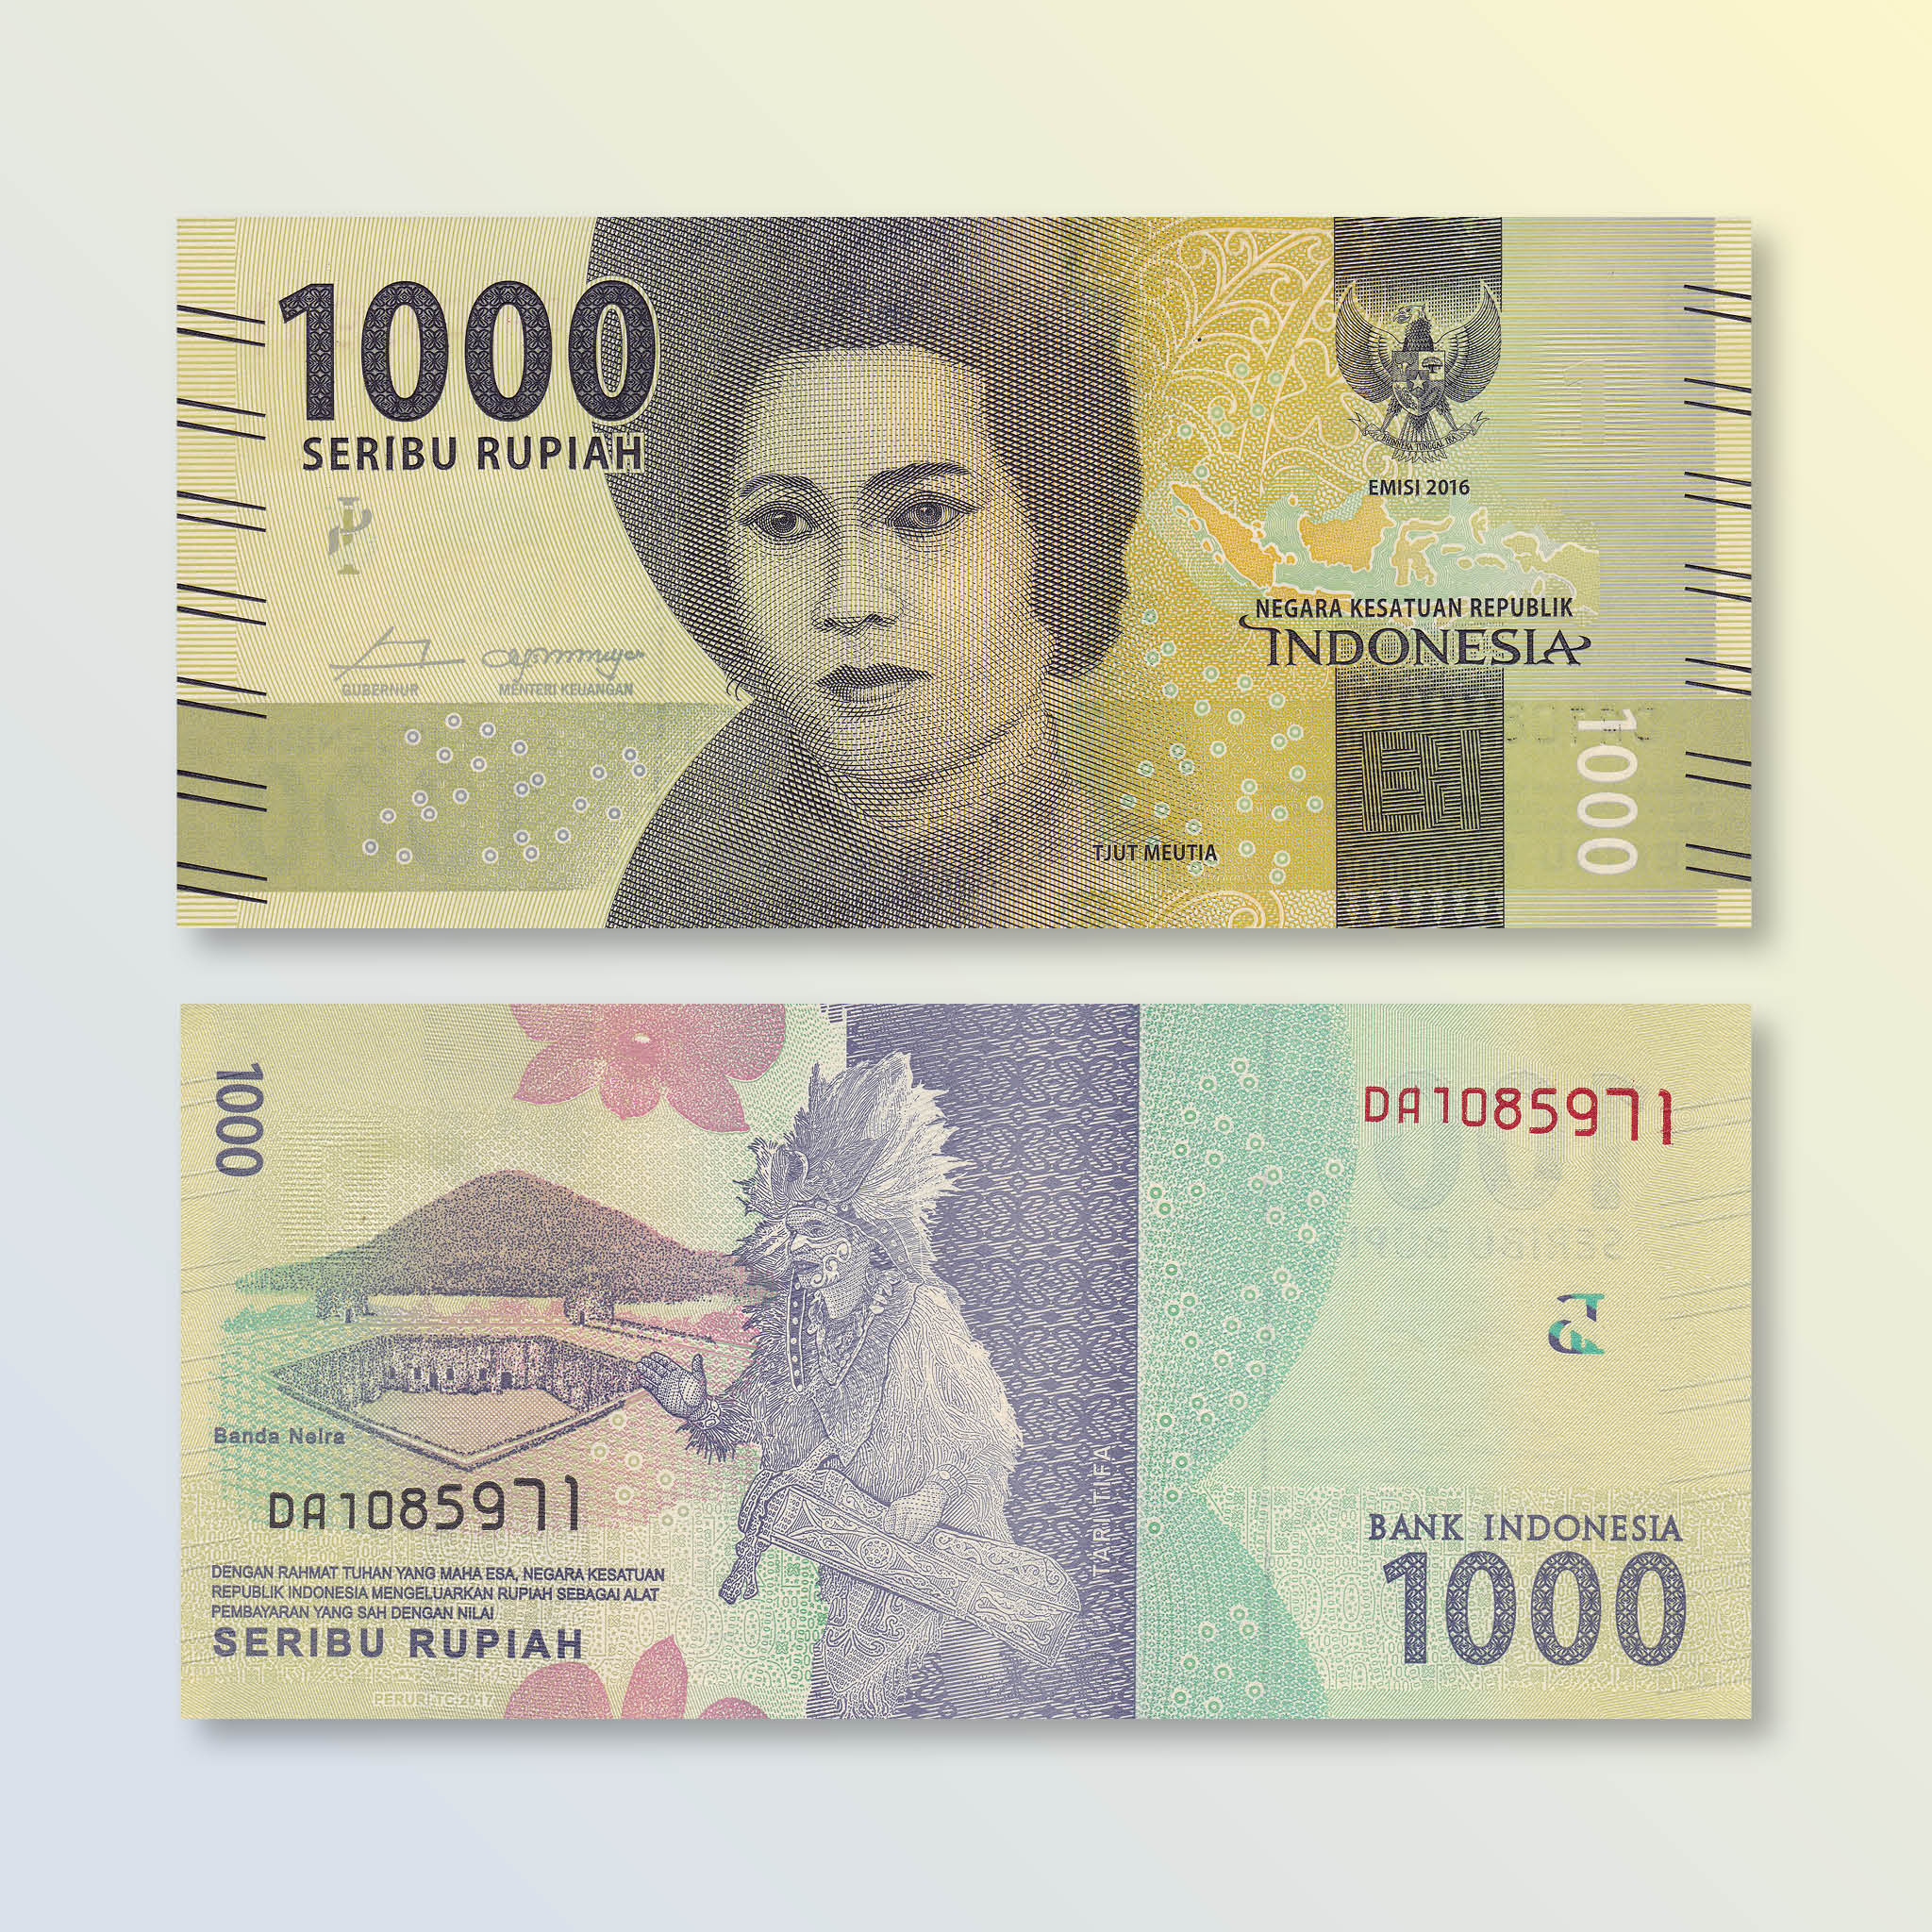 Indonesia 1000 Rupiah, 2016/2017, B609b, P154b, UNC - Robert's World Money - World Banknotes